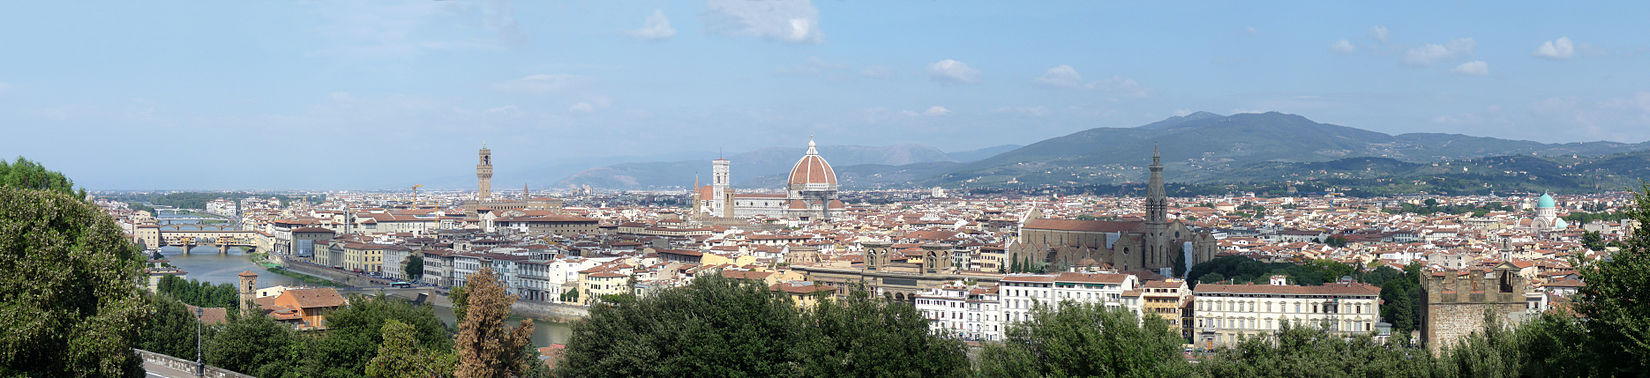 Firenze panorama 2.jpg